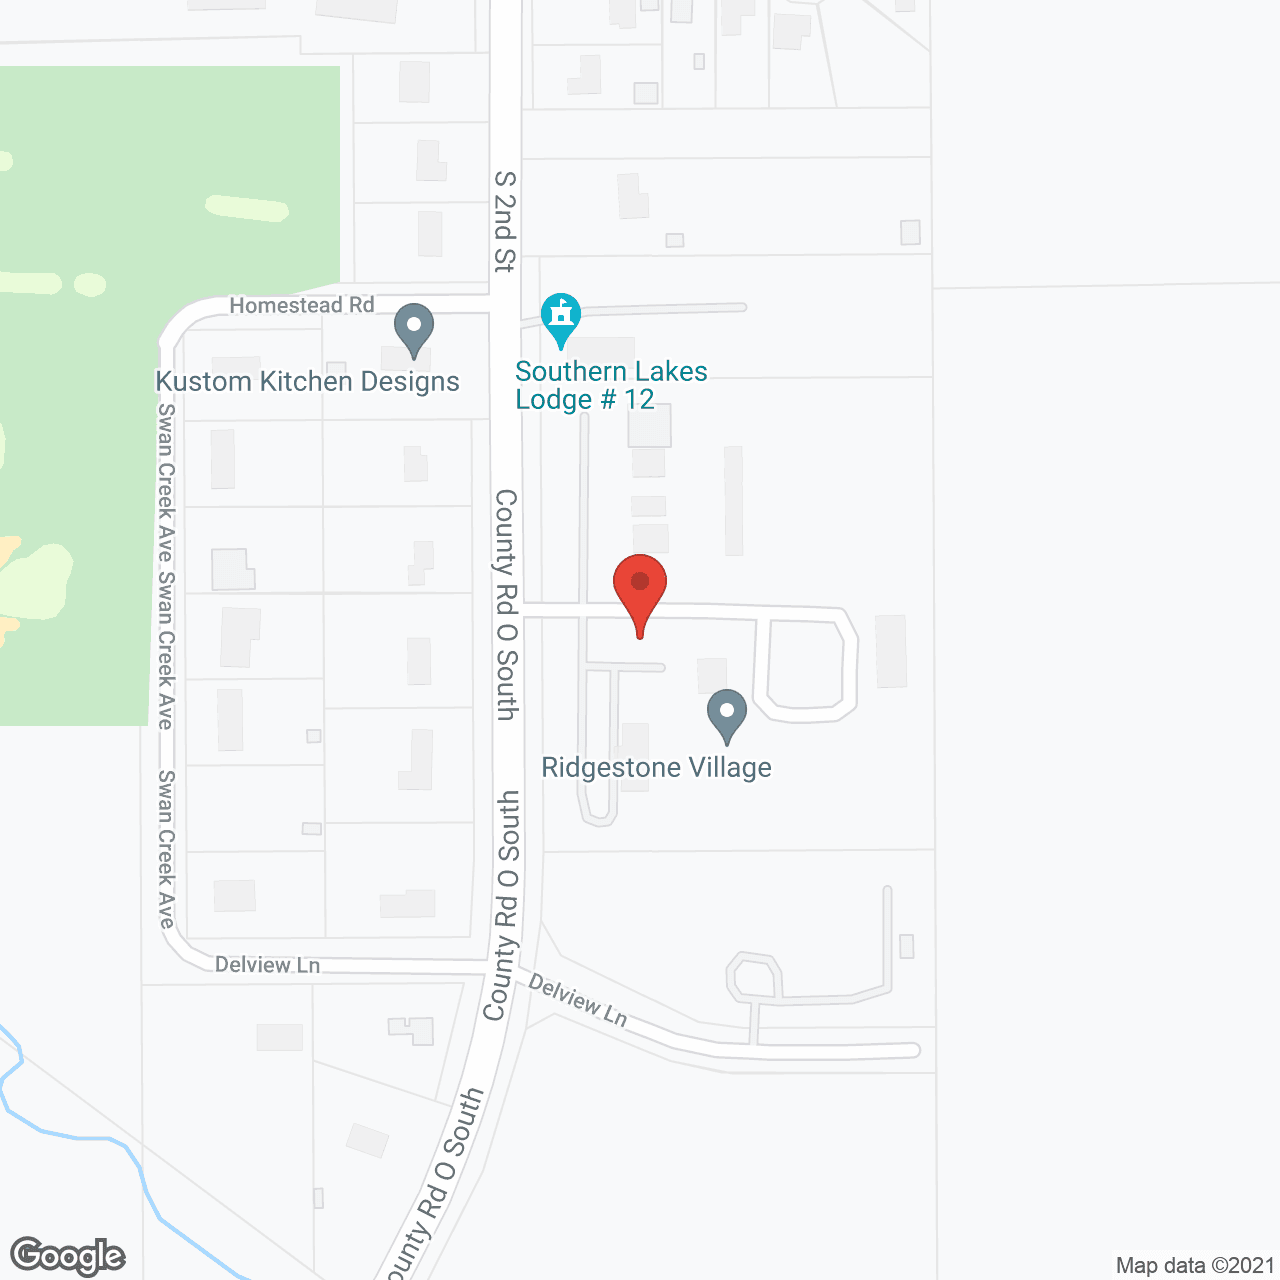 Ridgestone Village in google map